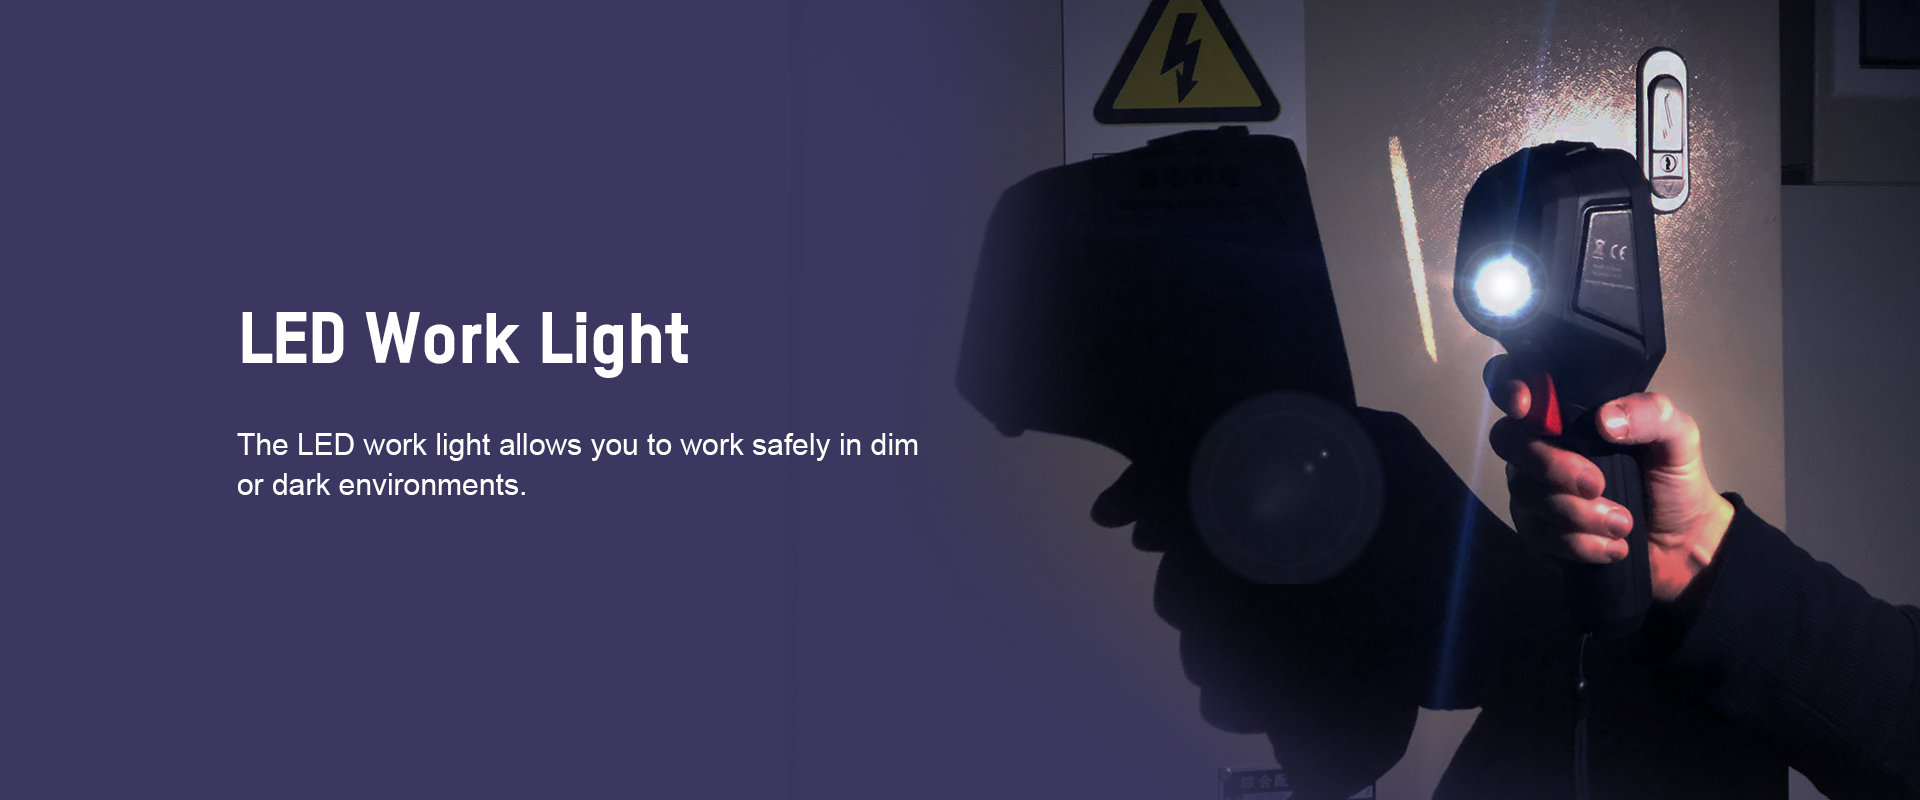 07-LED Work Light.png